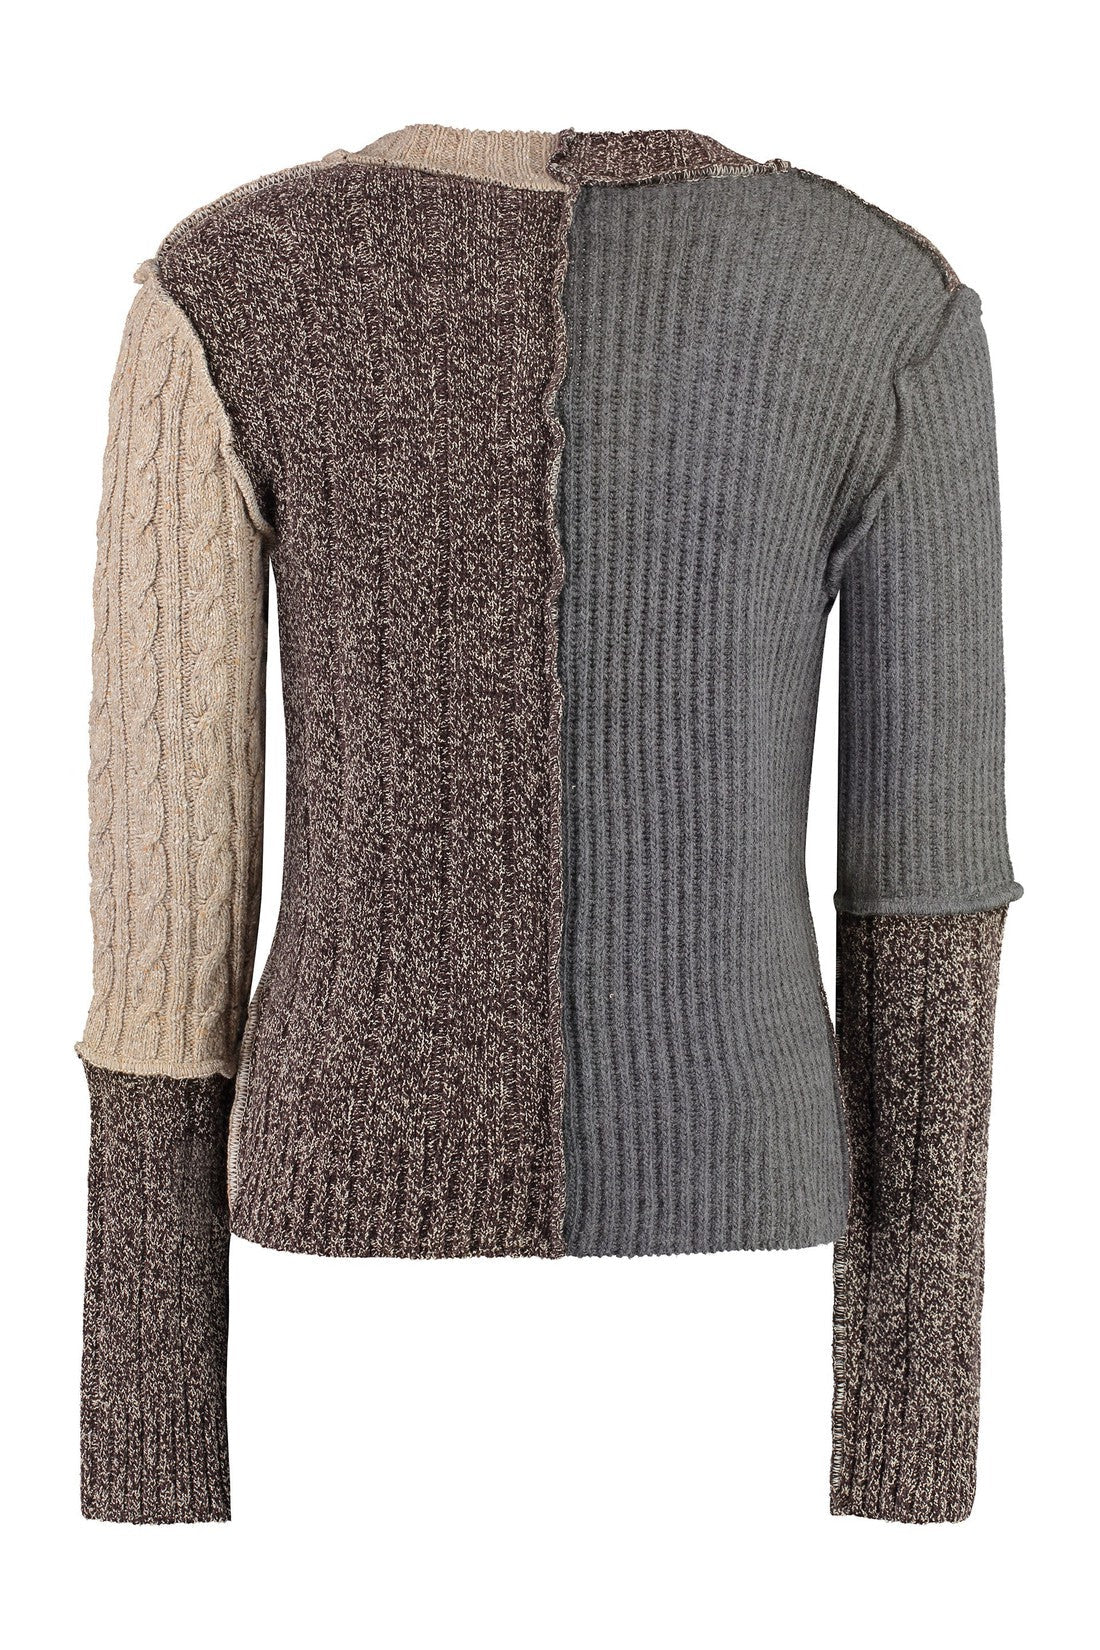 Dolce & Gabbana-OUTLET-SALE-Cable knit sweater-ARCHIVIST